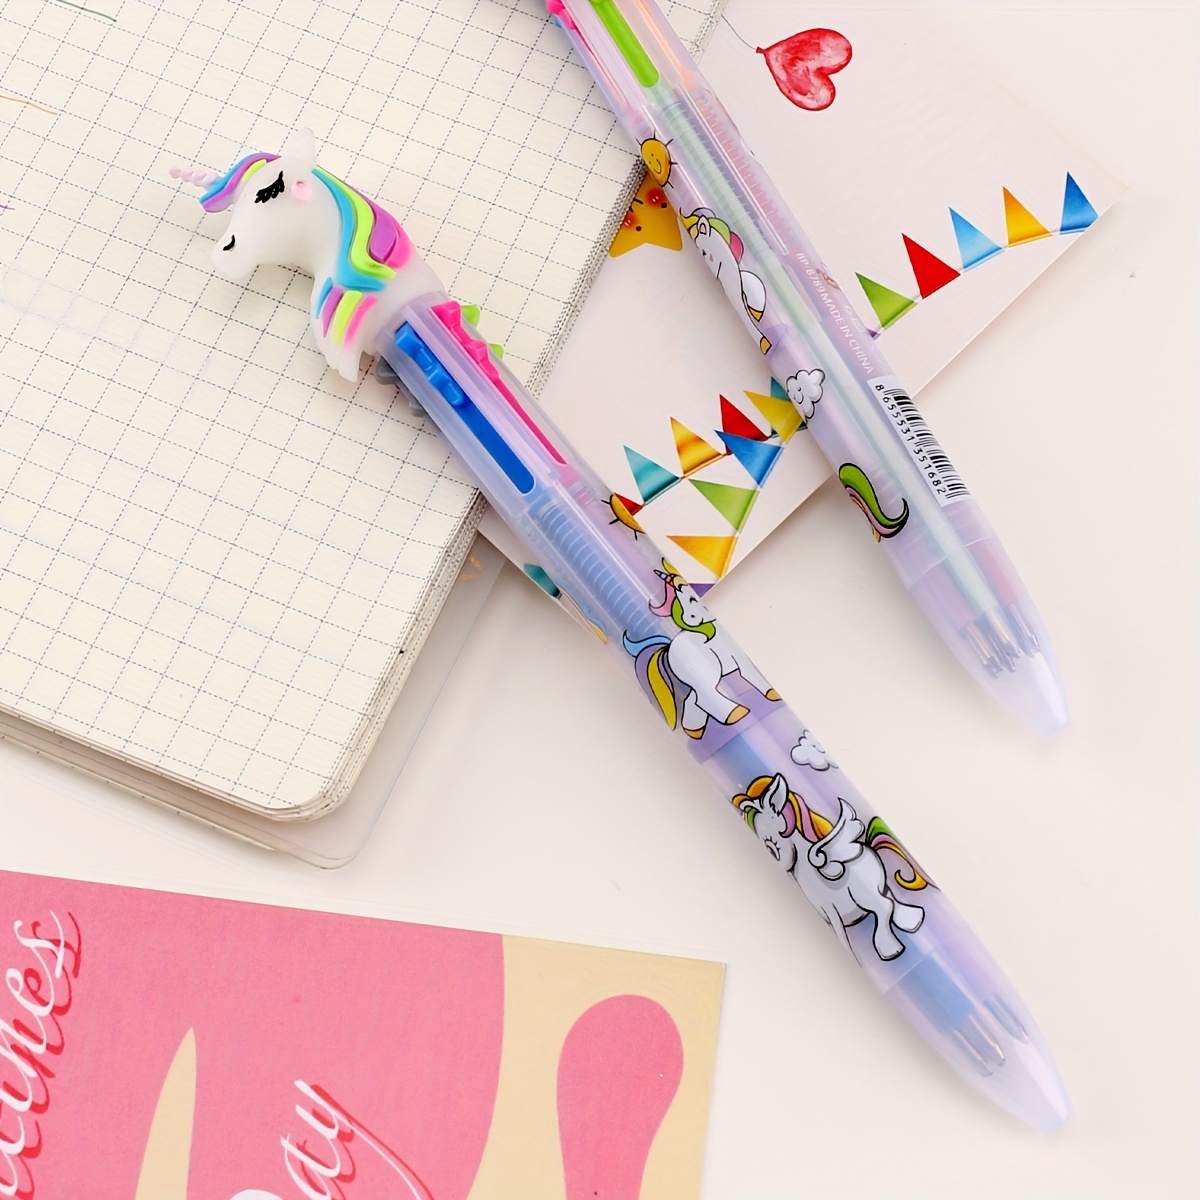 1pc Random Stationery Cute Pens Stationary Pens Back To School Stationery  Cute Things Pens Kawaii Cute Pen